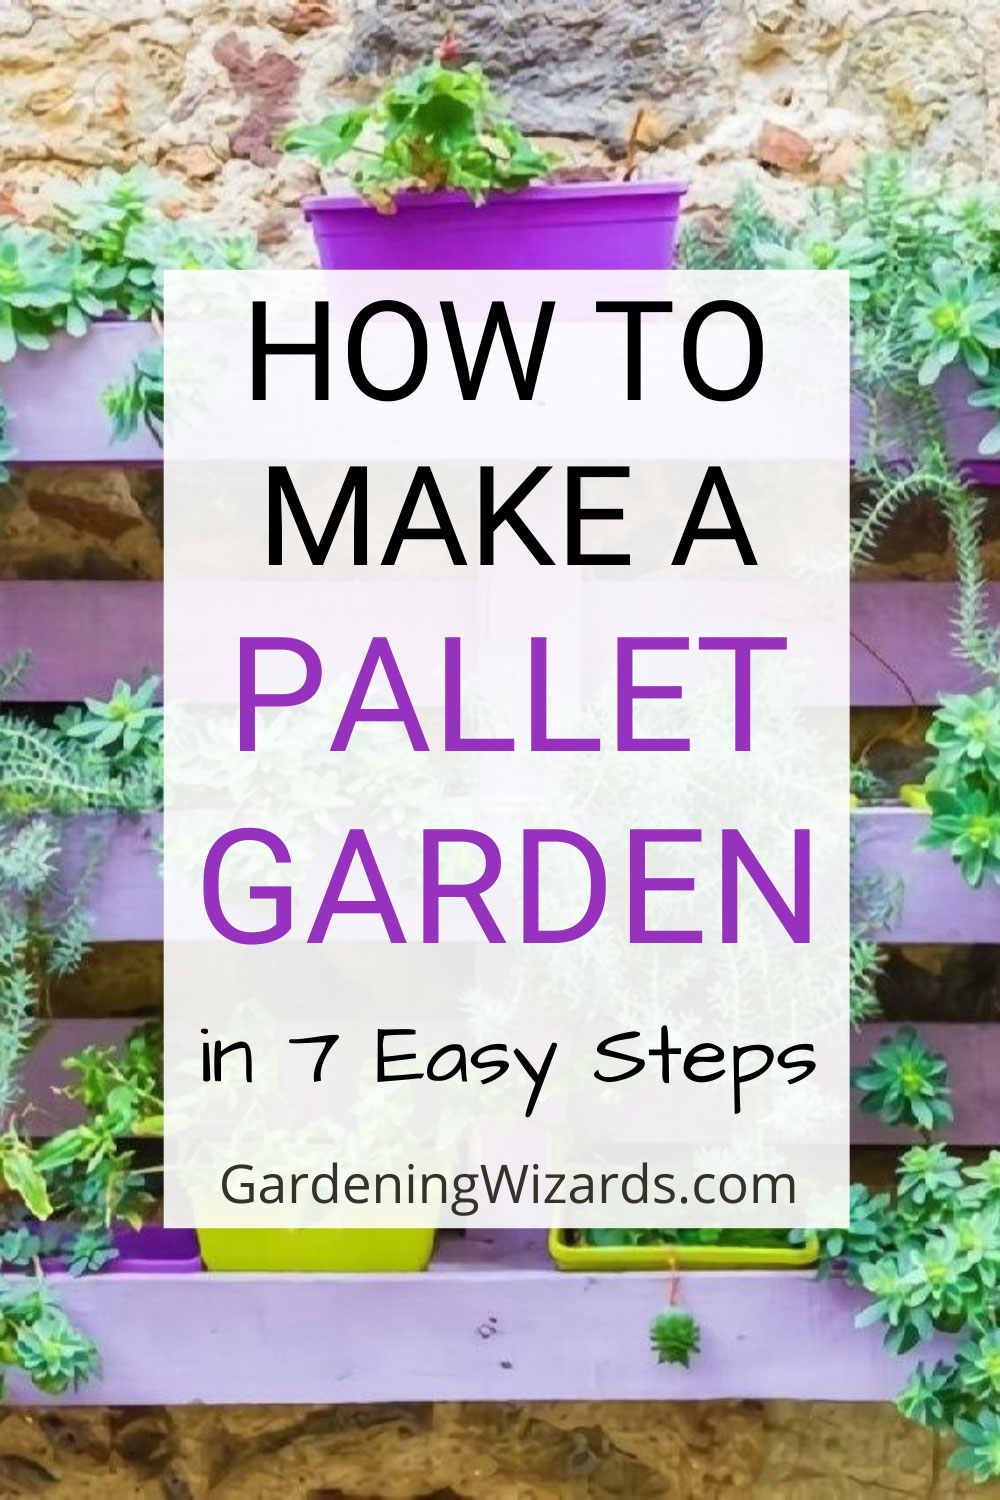 How to Make A Pallet Garden